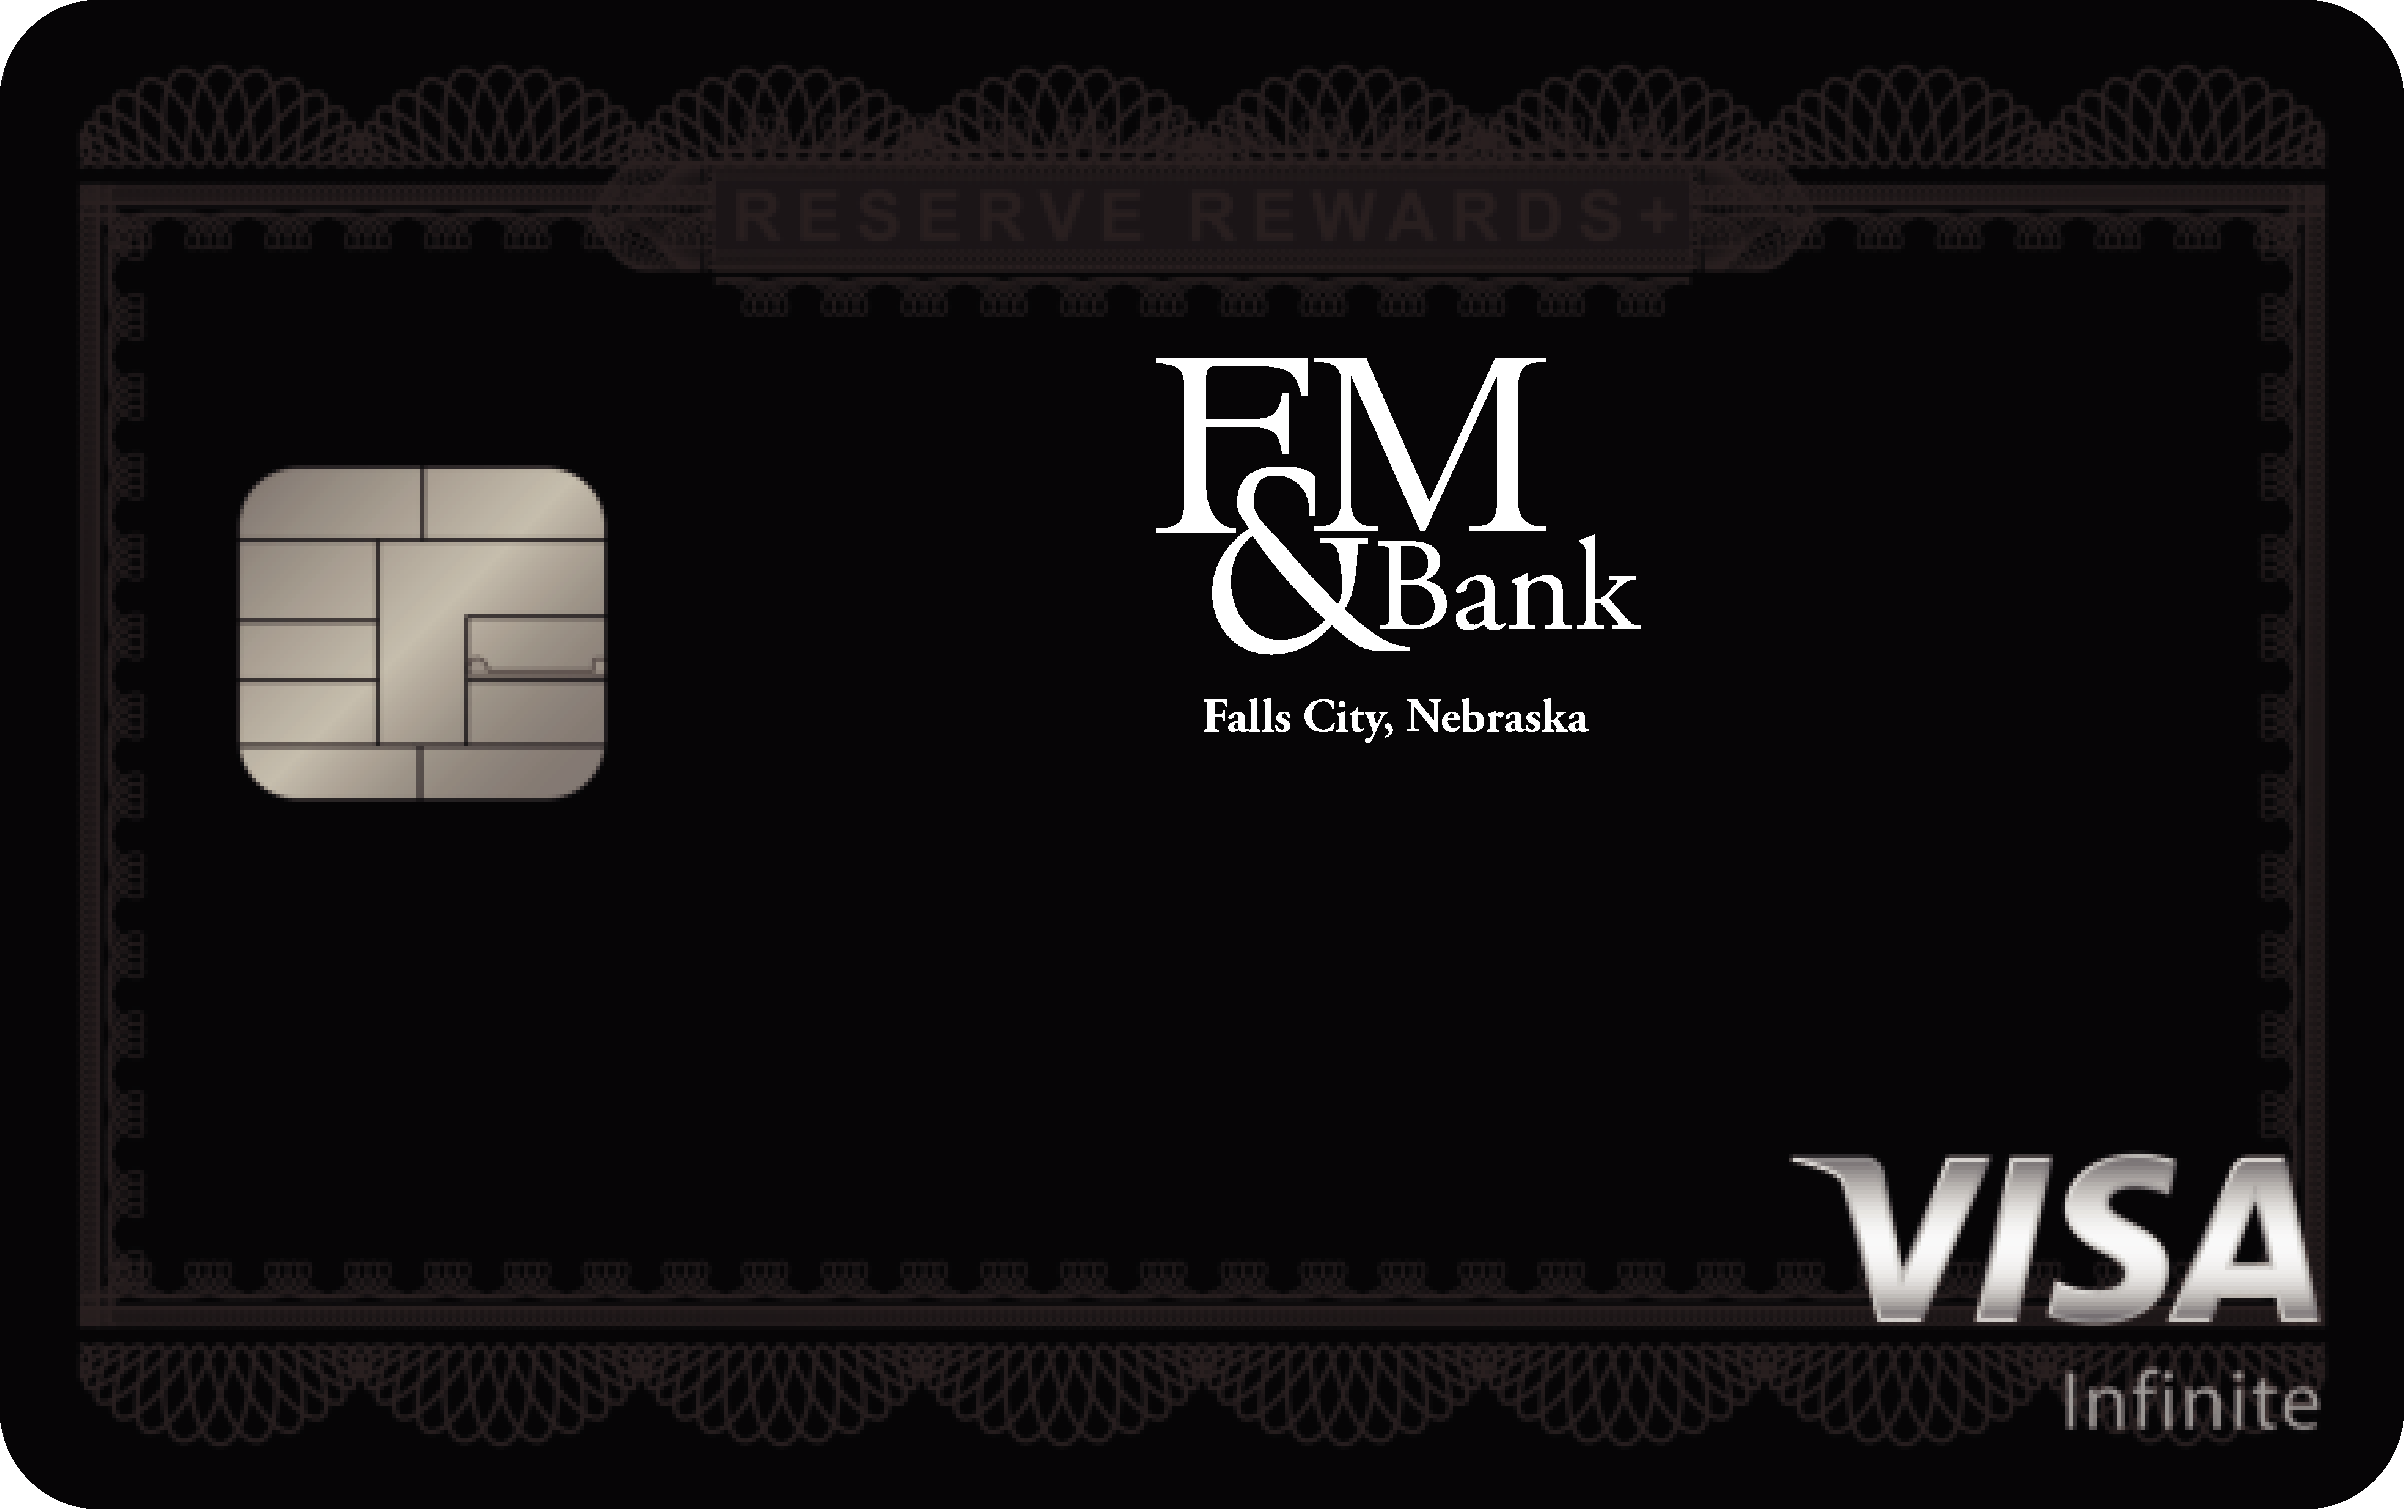 F&M Bank Reserve Rewards+ Card